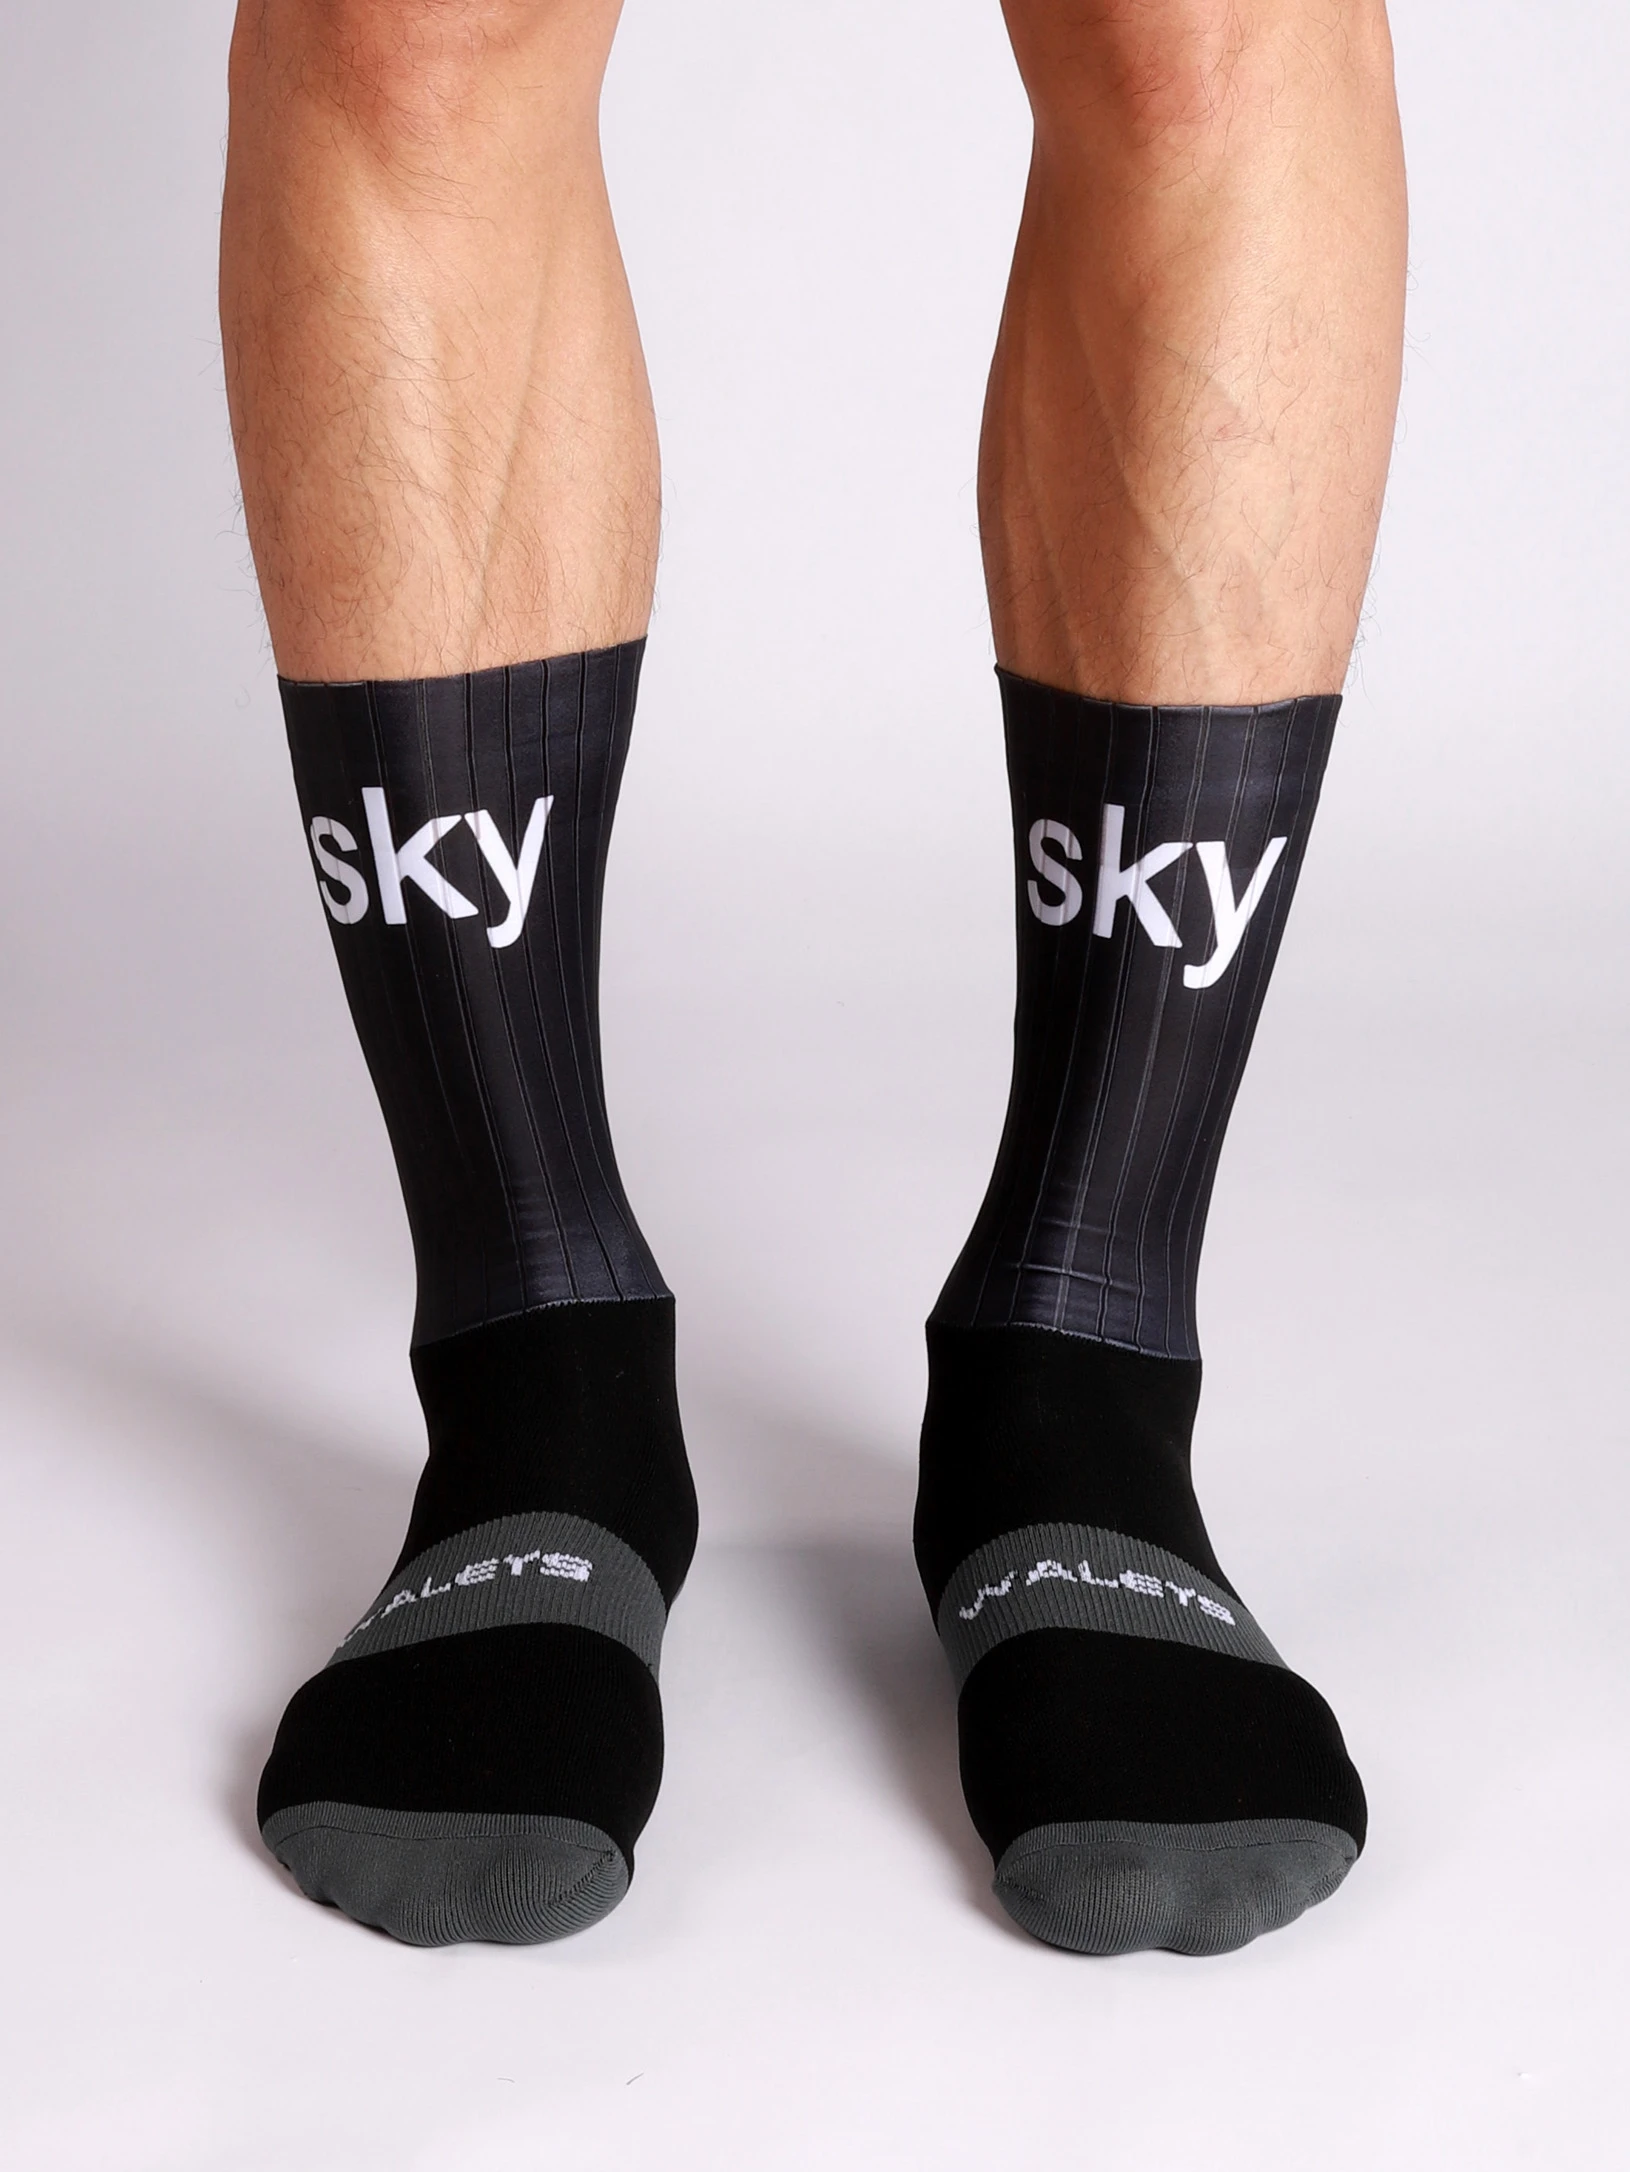 Fashion Cycling Black White socks Long tube non-slip silicone cycling socks Letter men's sports socks